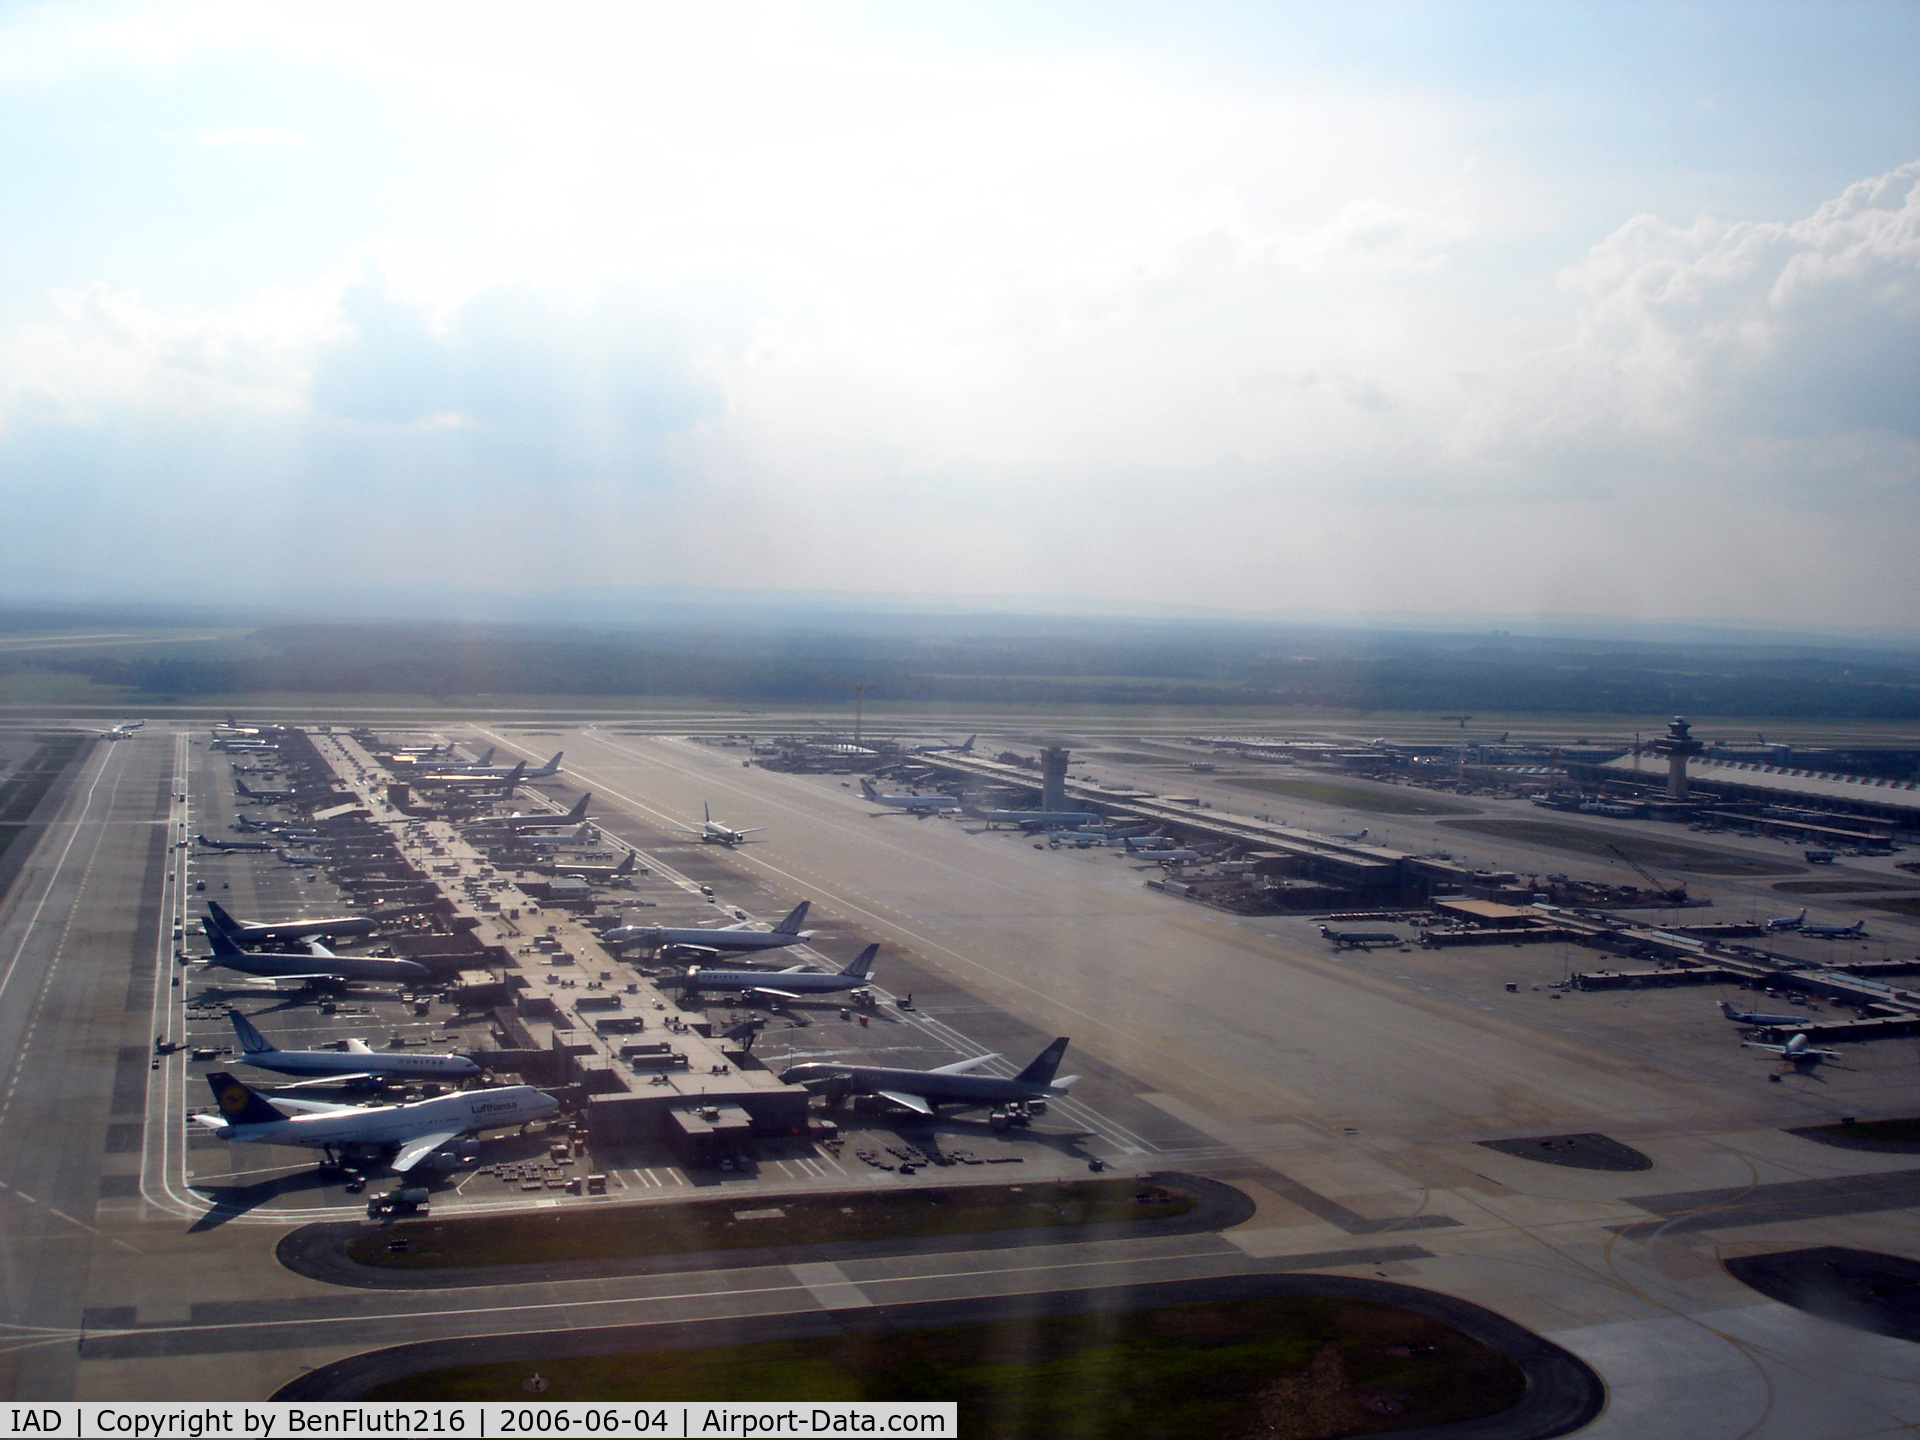 Washington Dulles International Airport (IAD) - Departing for Orlando on an AirTran 717.